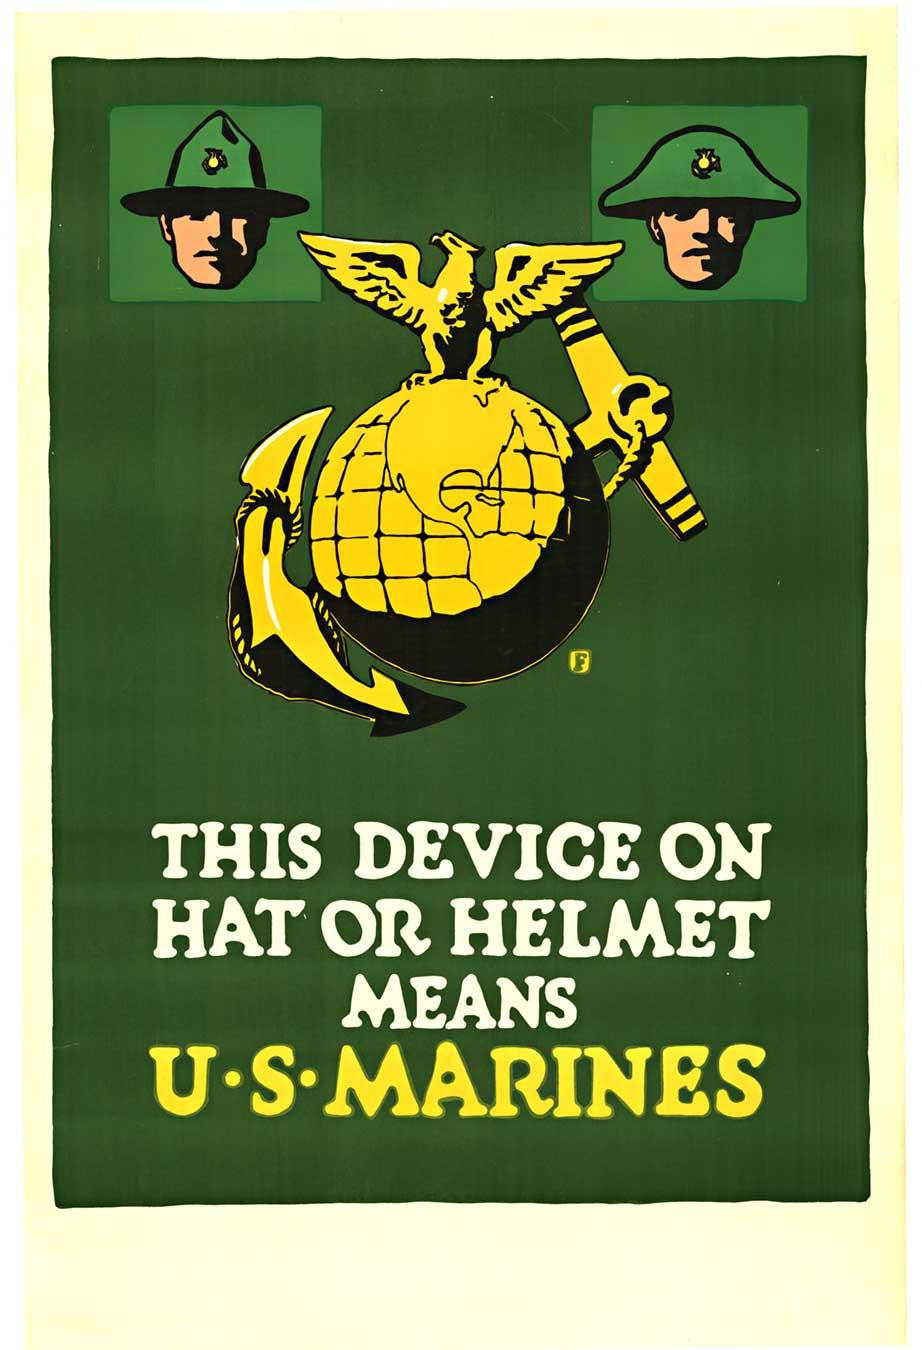 Original "This Device on Hat or Helmet means U. S. MARINES" vintage poster